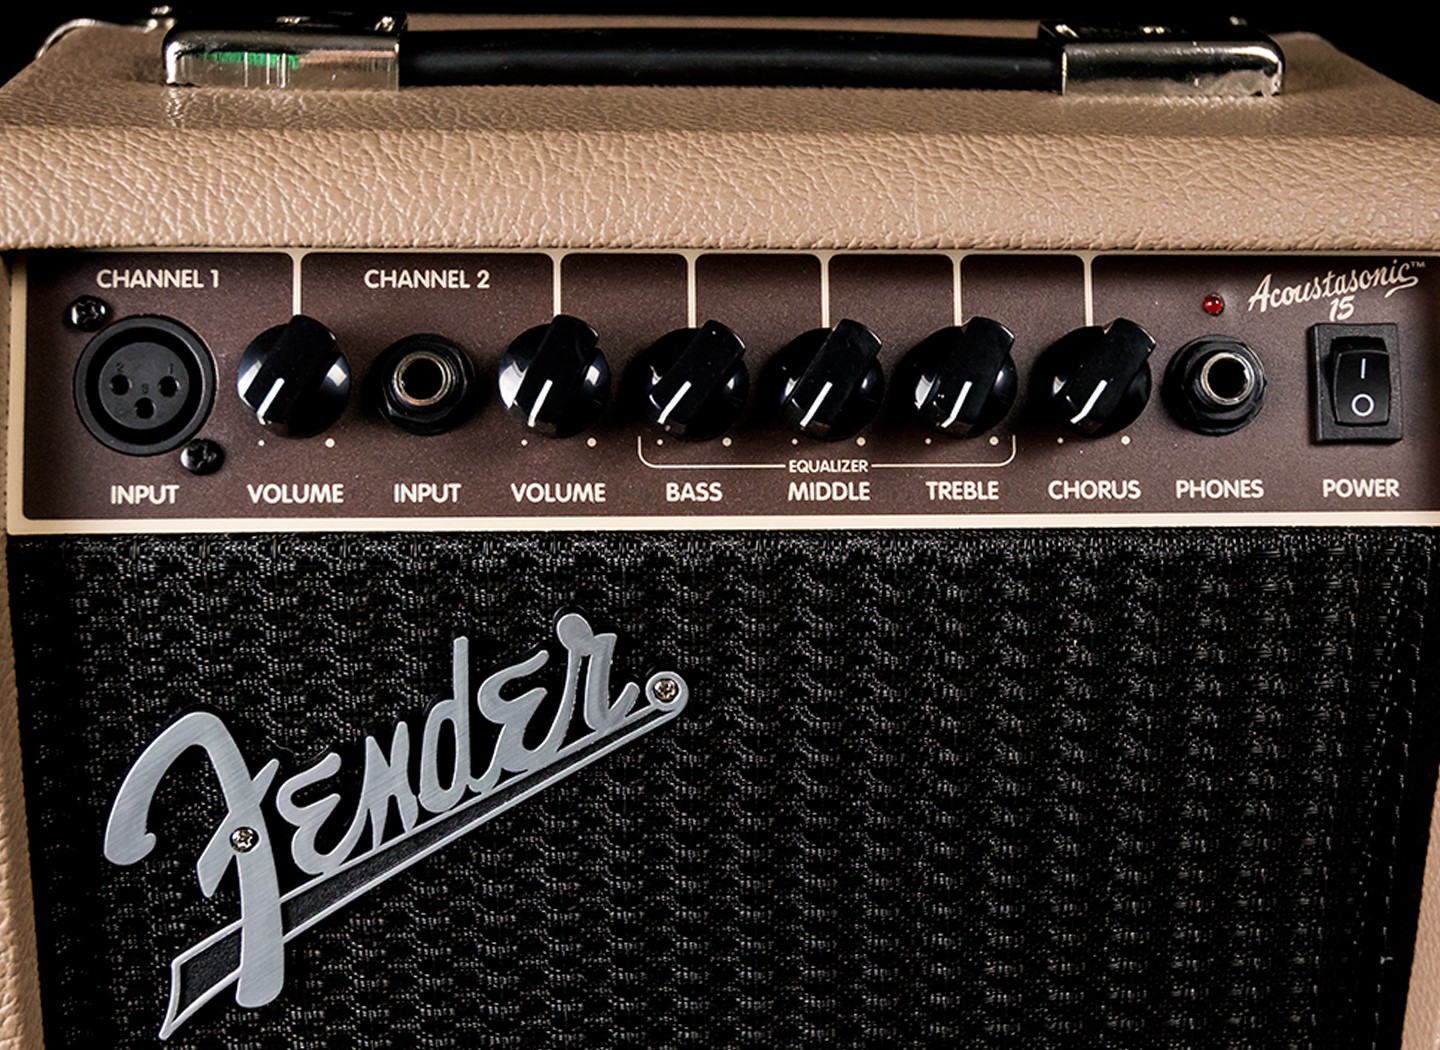 Fender® Acoustasonic 15 Acoustic Guitar Amplifier 15 Watt 1 x 6